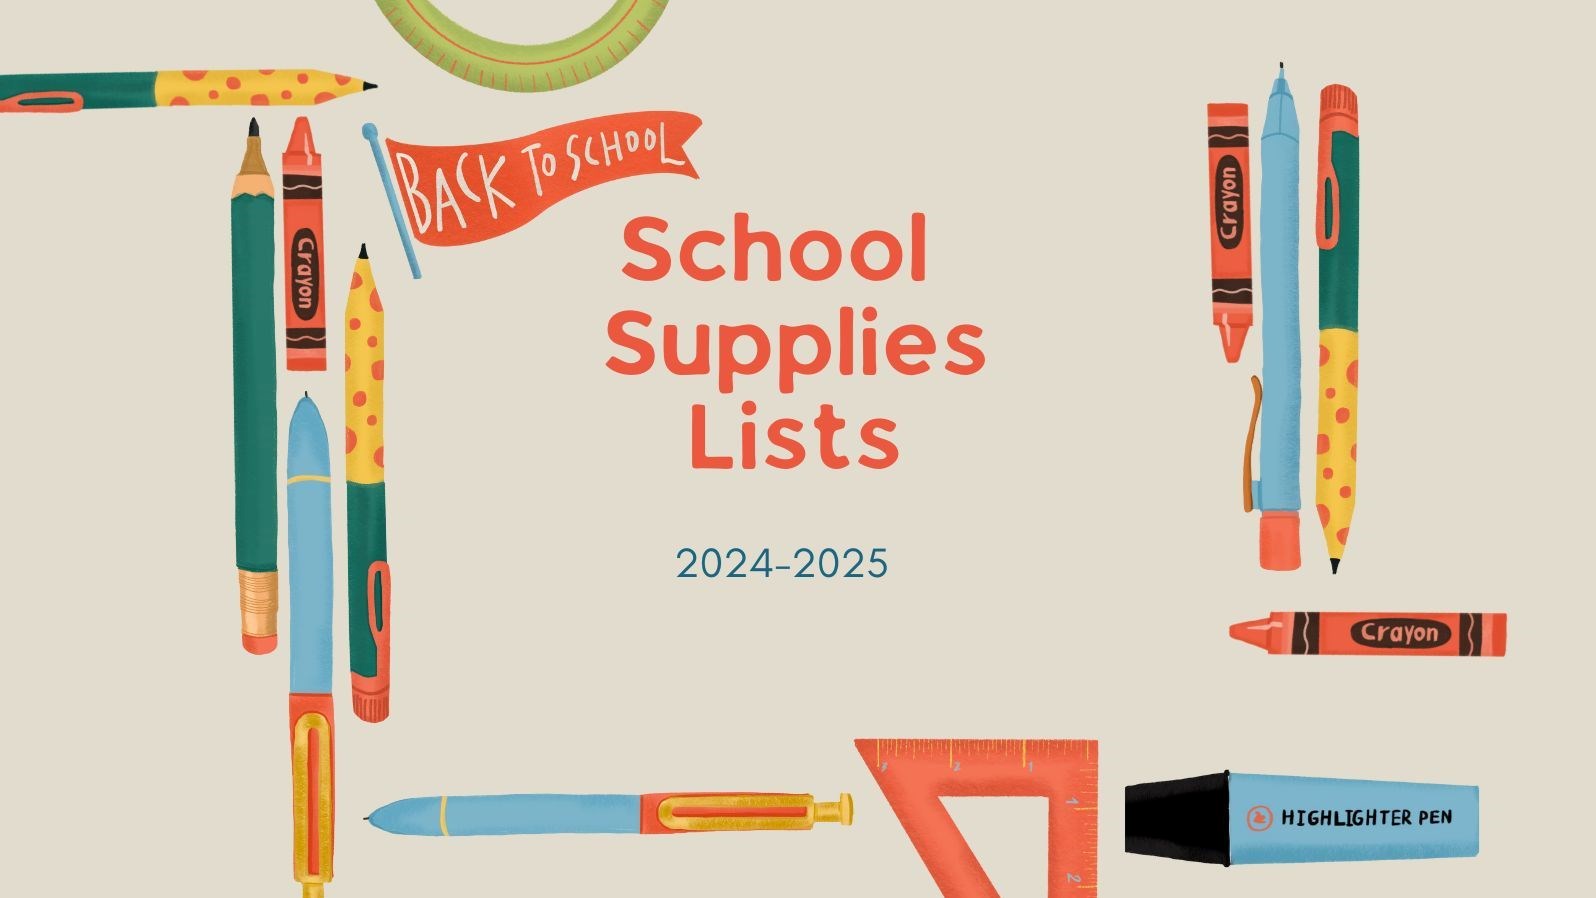 Back to School, School Supplies Lists 2024-2025